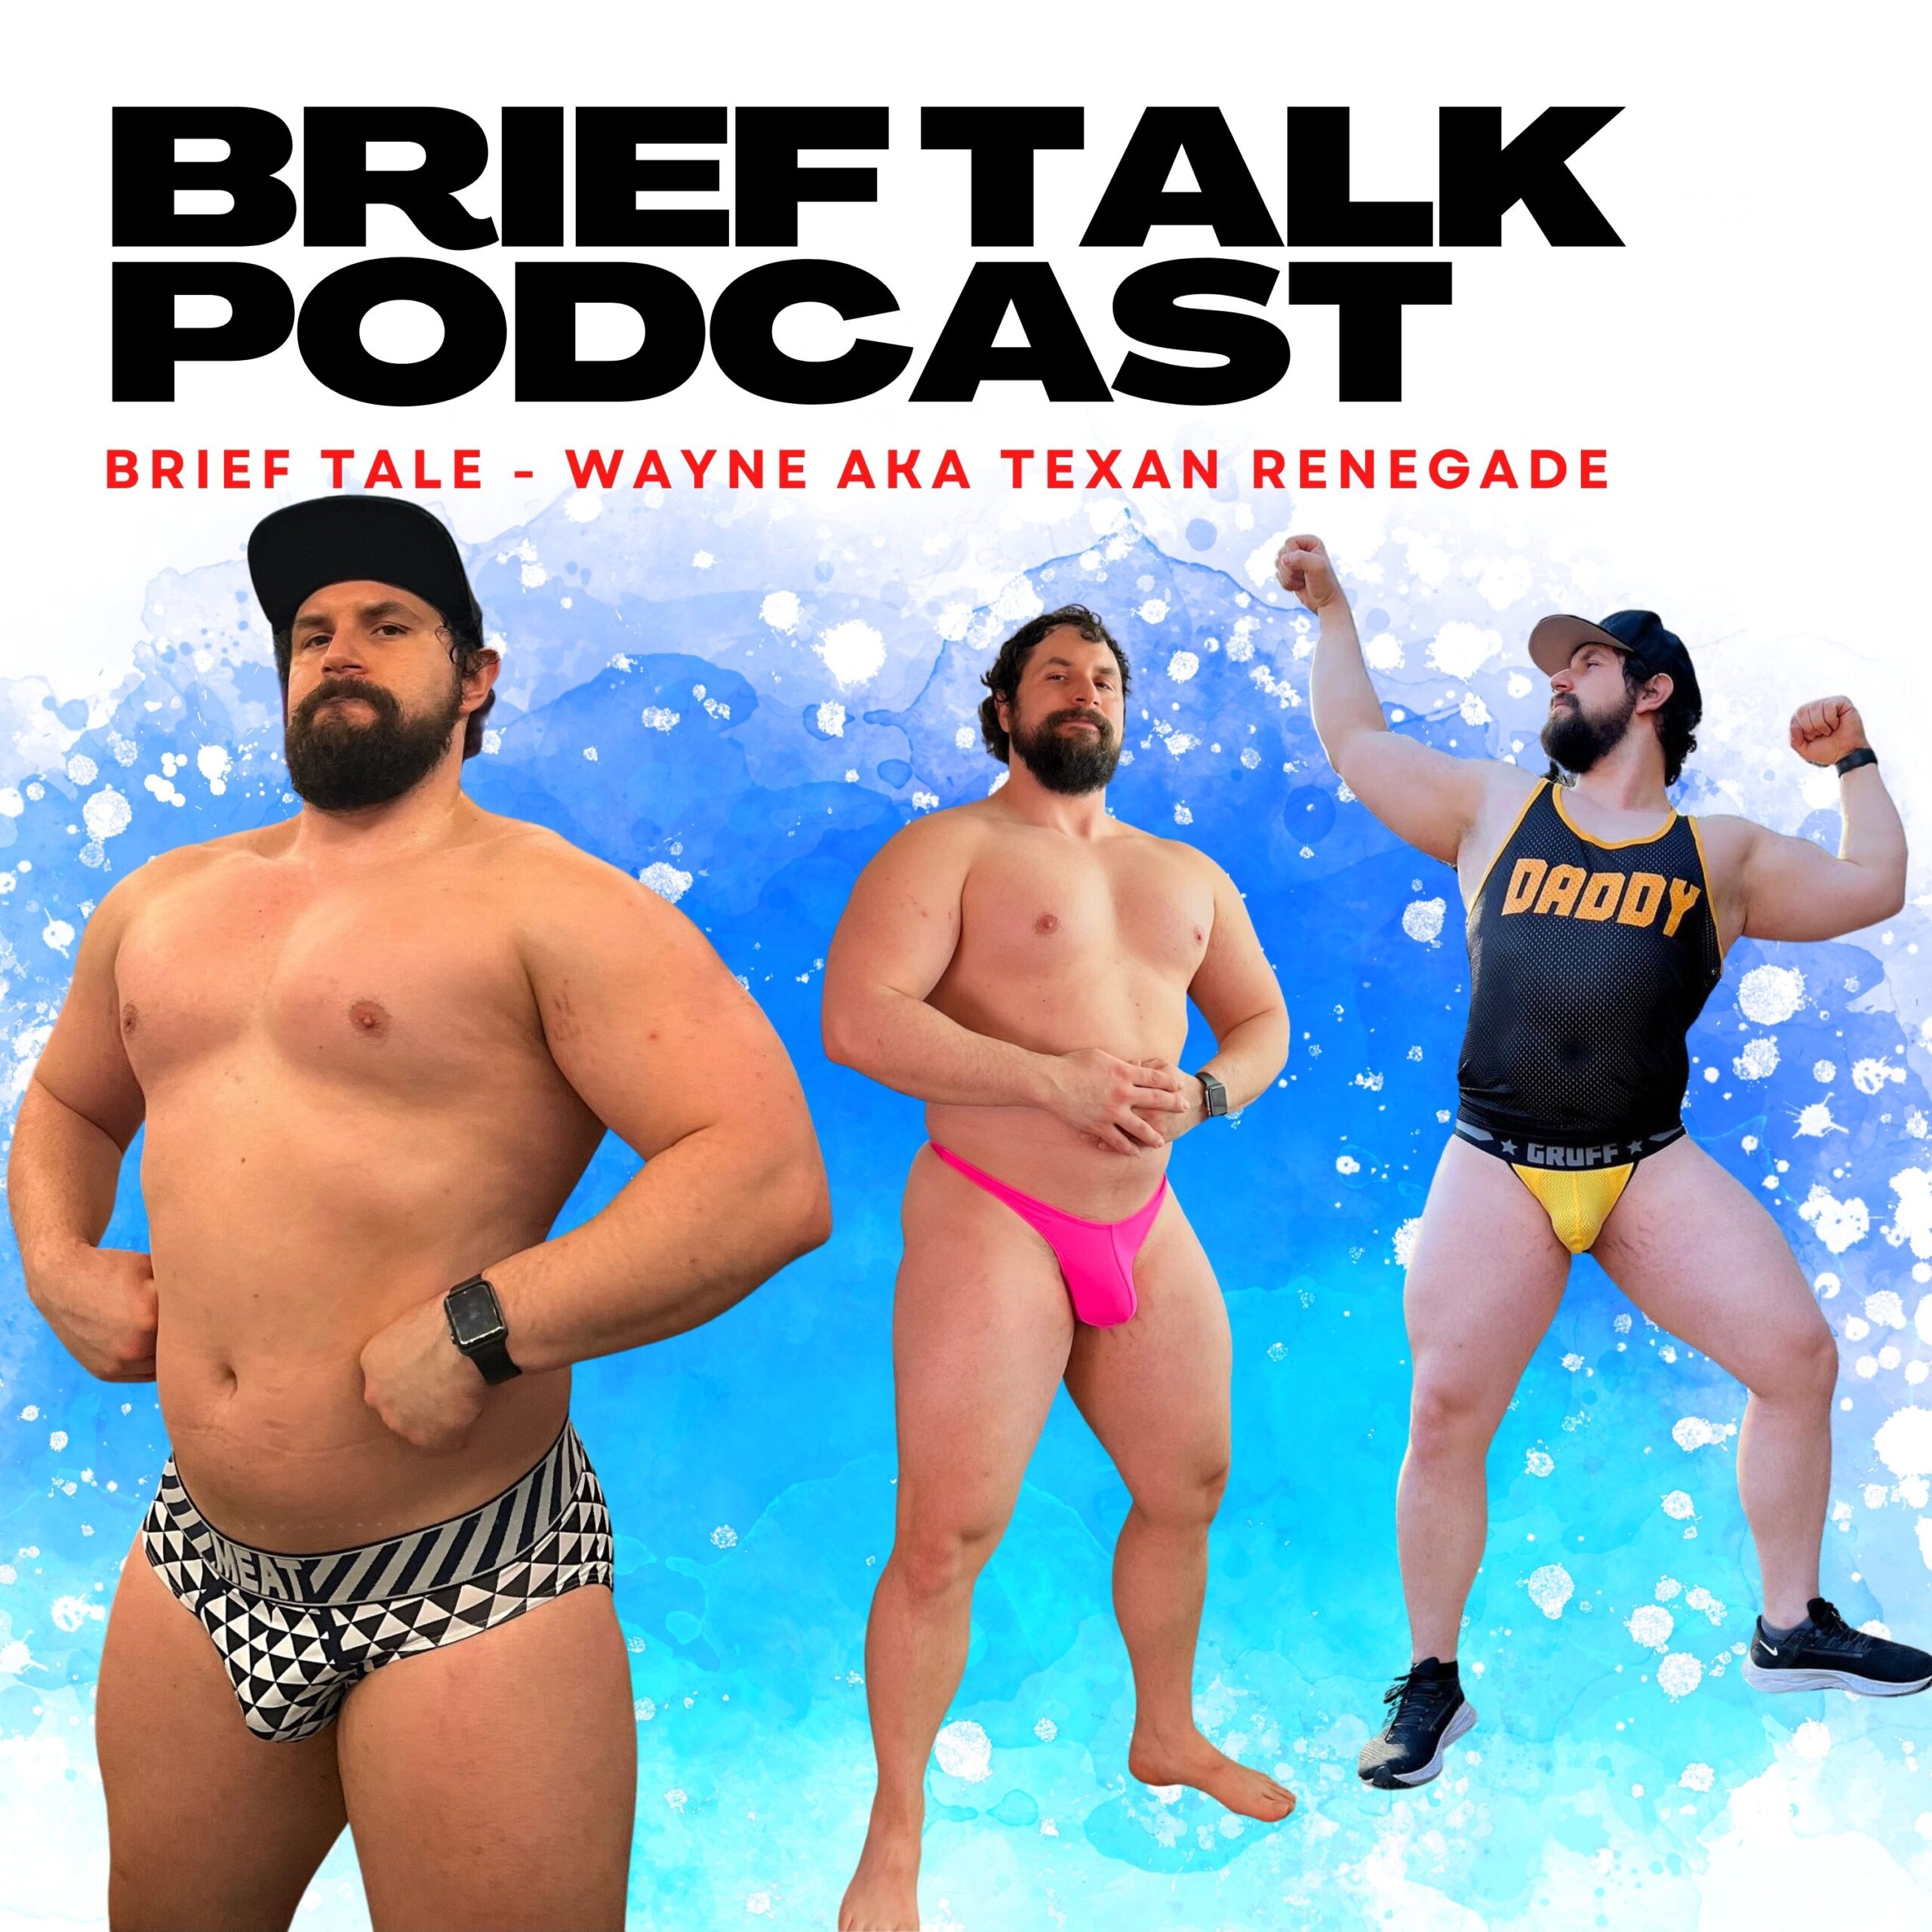 Brief Talk Podcast - Brief Tale Wayne Aka Texan renegade